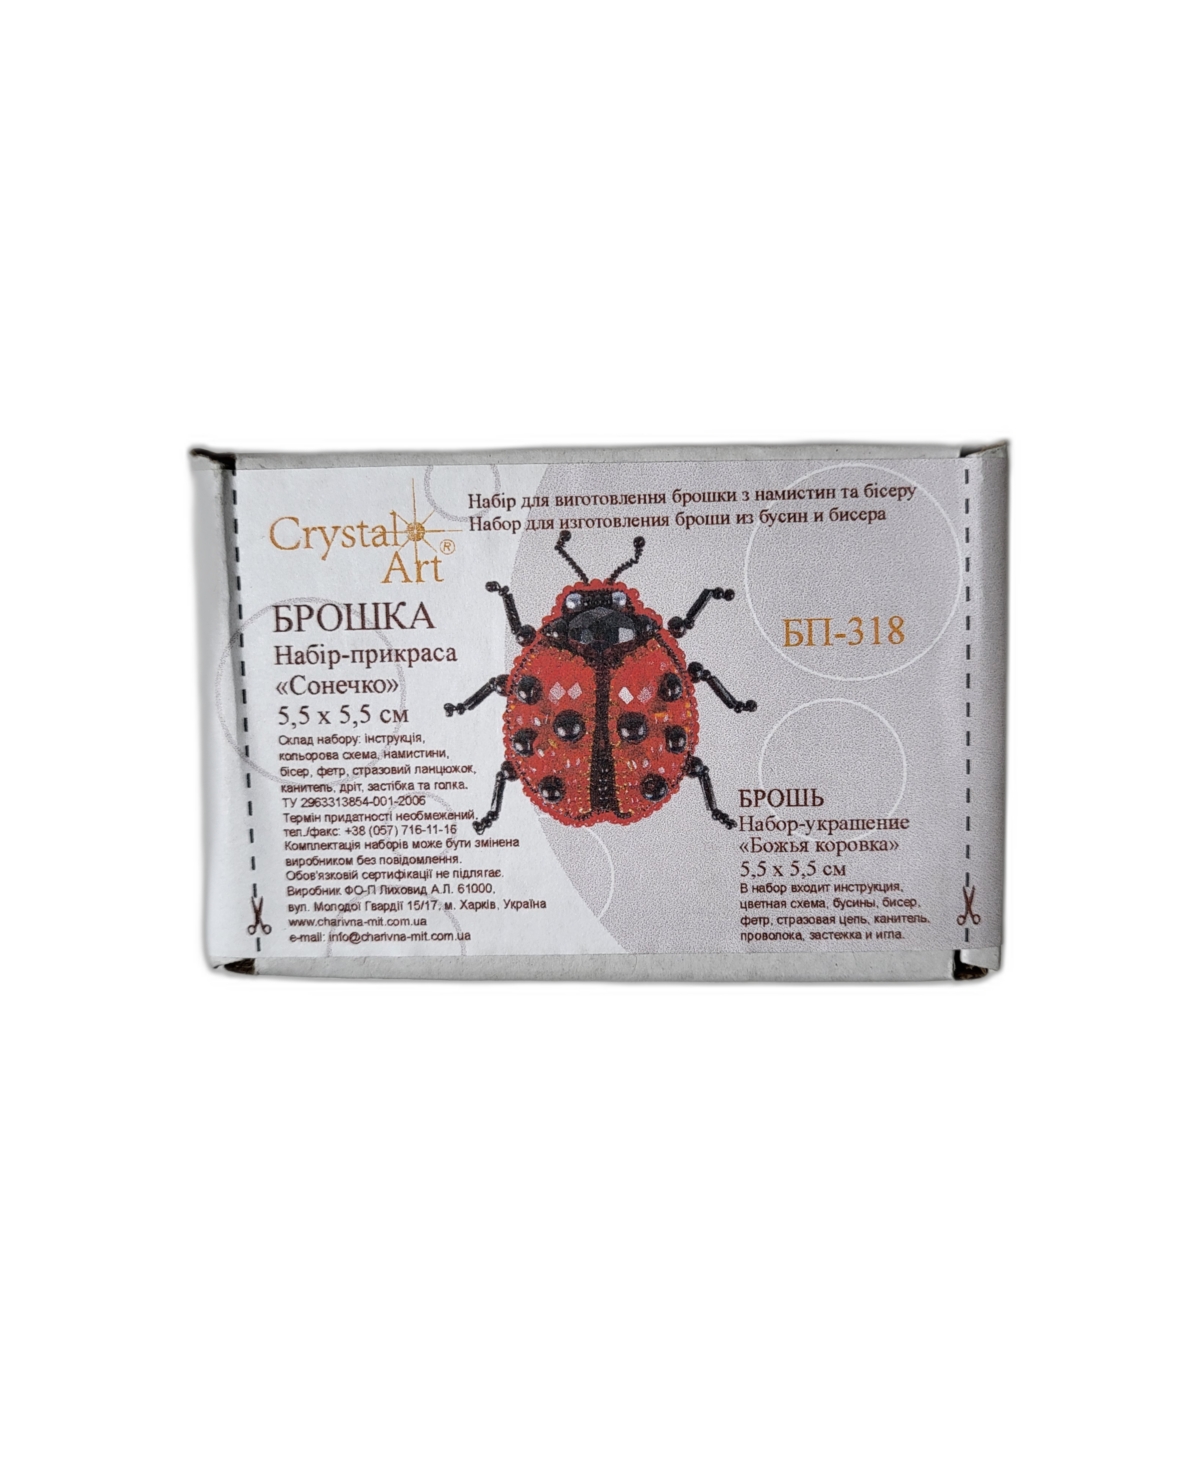 Charivna Mit Bp-318C Beadwork kit for creating brooch Ladybug